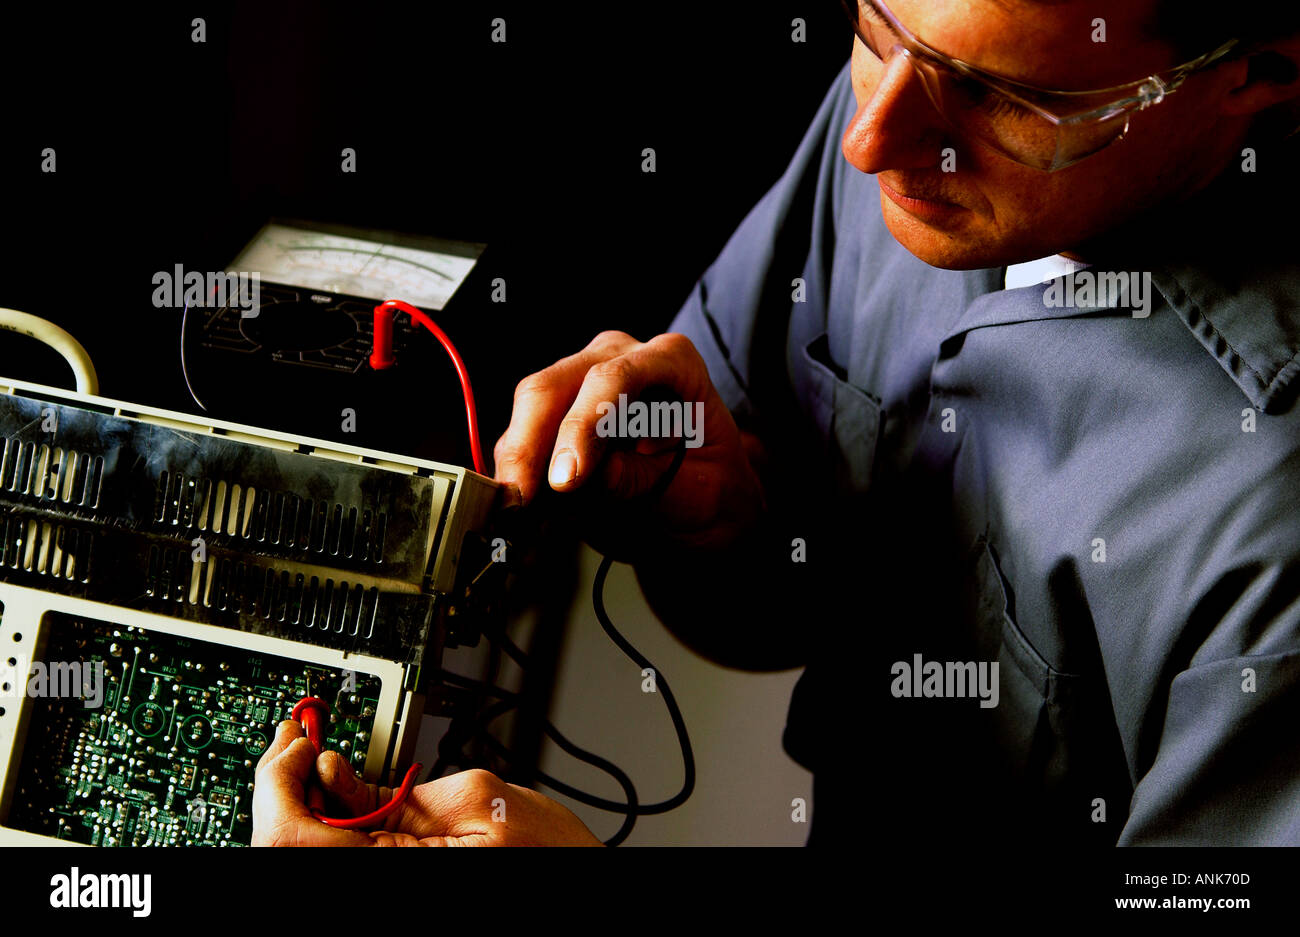 Technician repairing electronics item Stock Photo